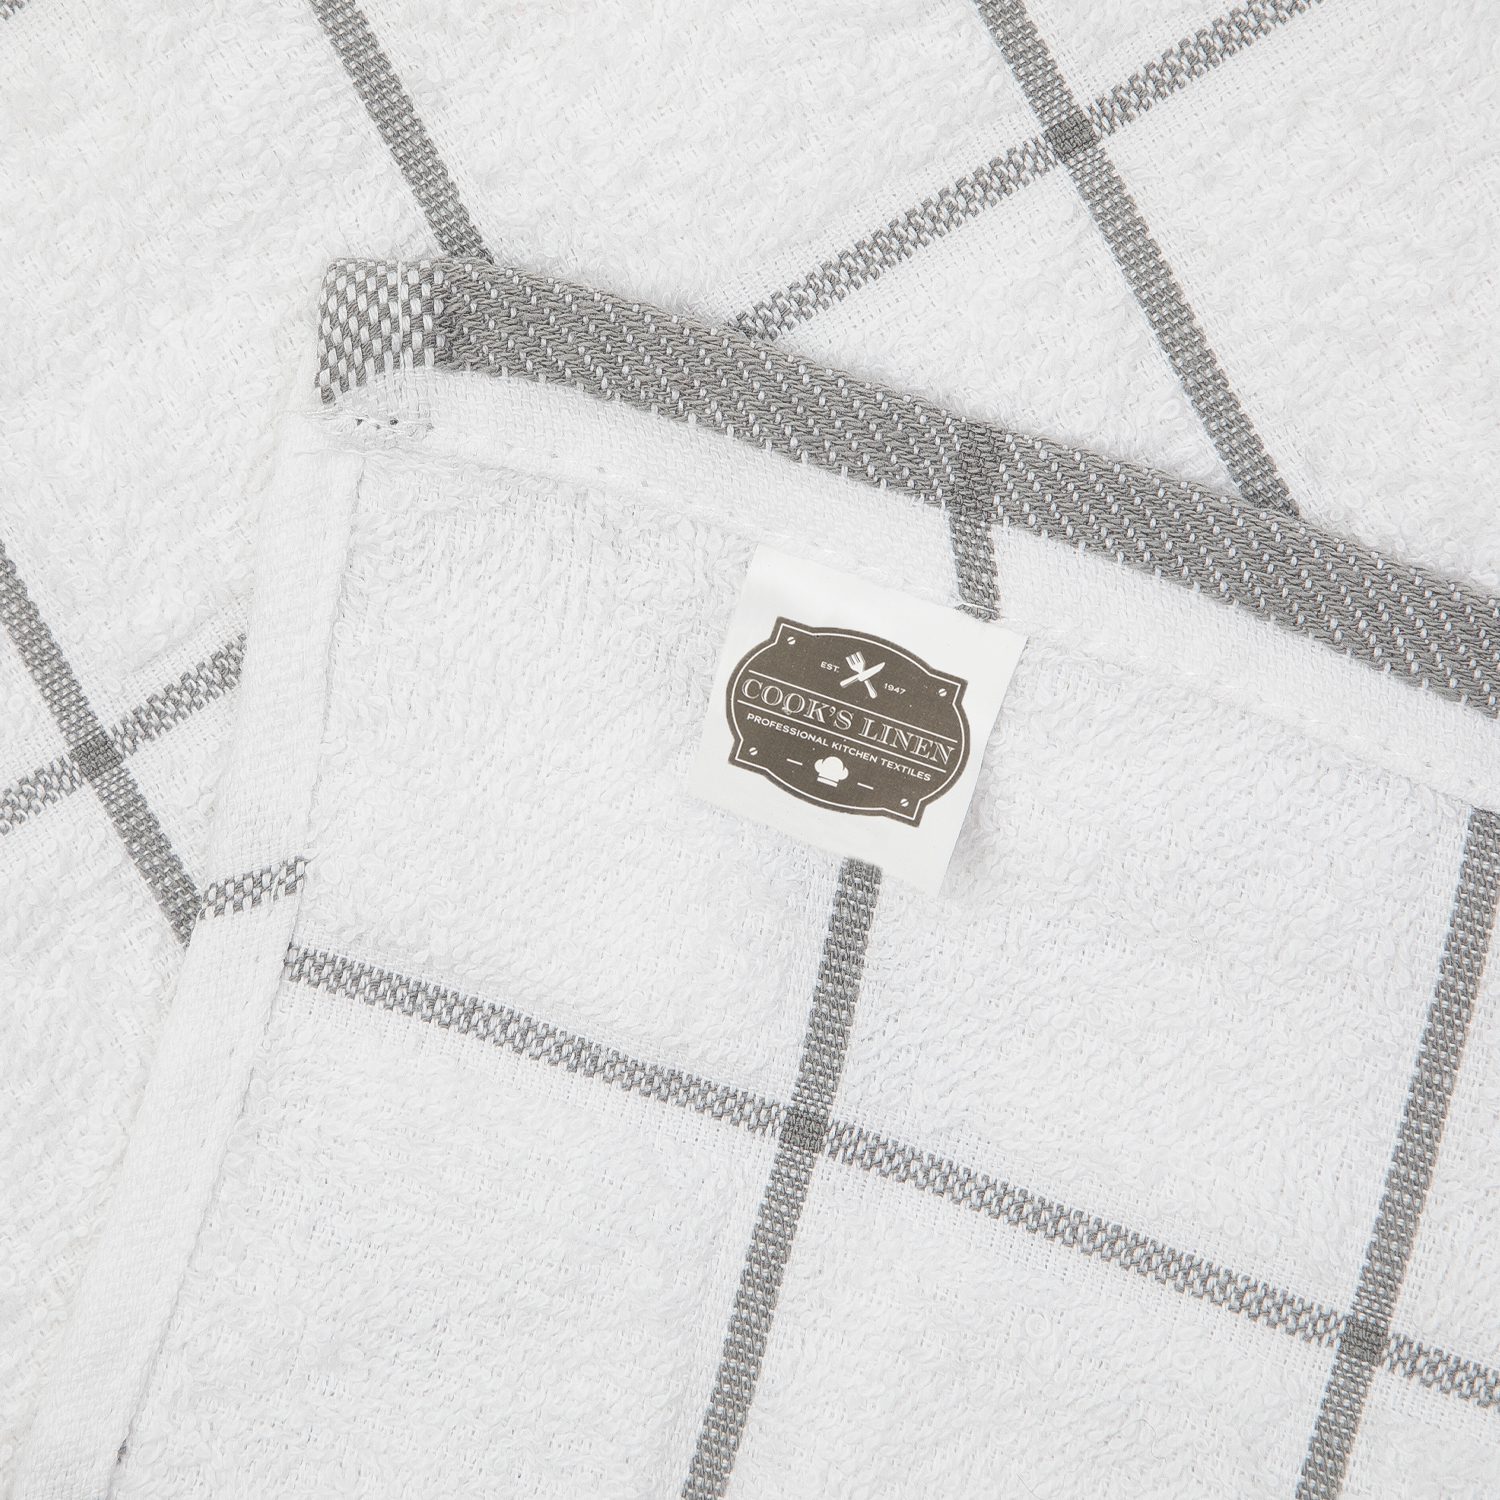 Monarch Brands Cooks Linen 12 x 12 Gray Windowpane Pattern 16 oz. 100%  Cotton Terry